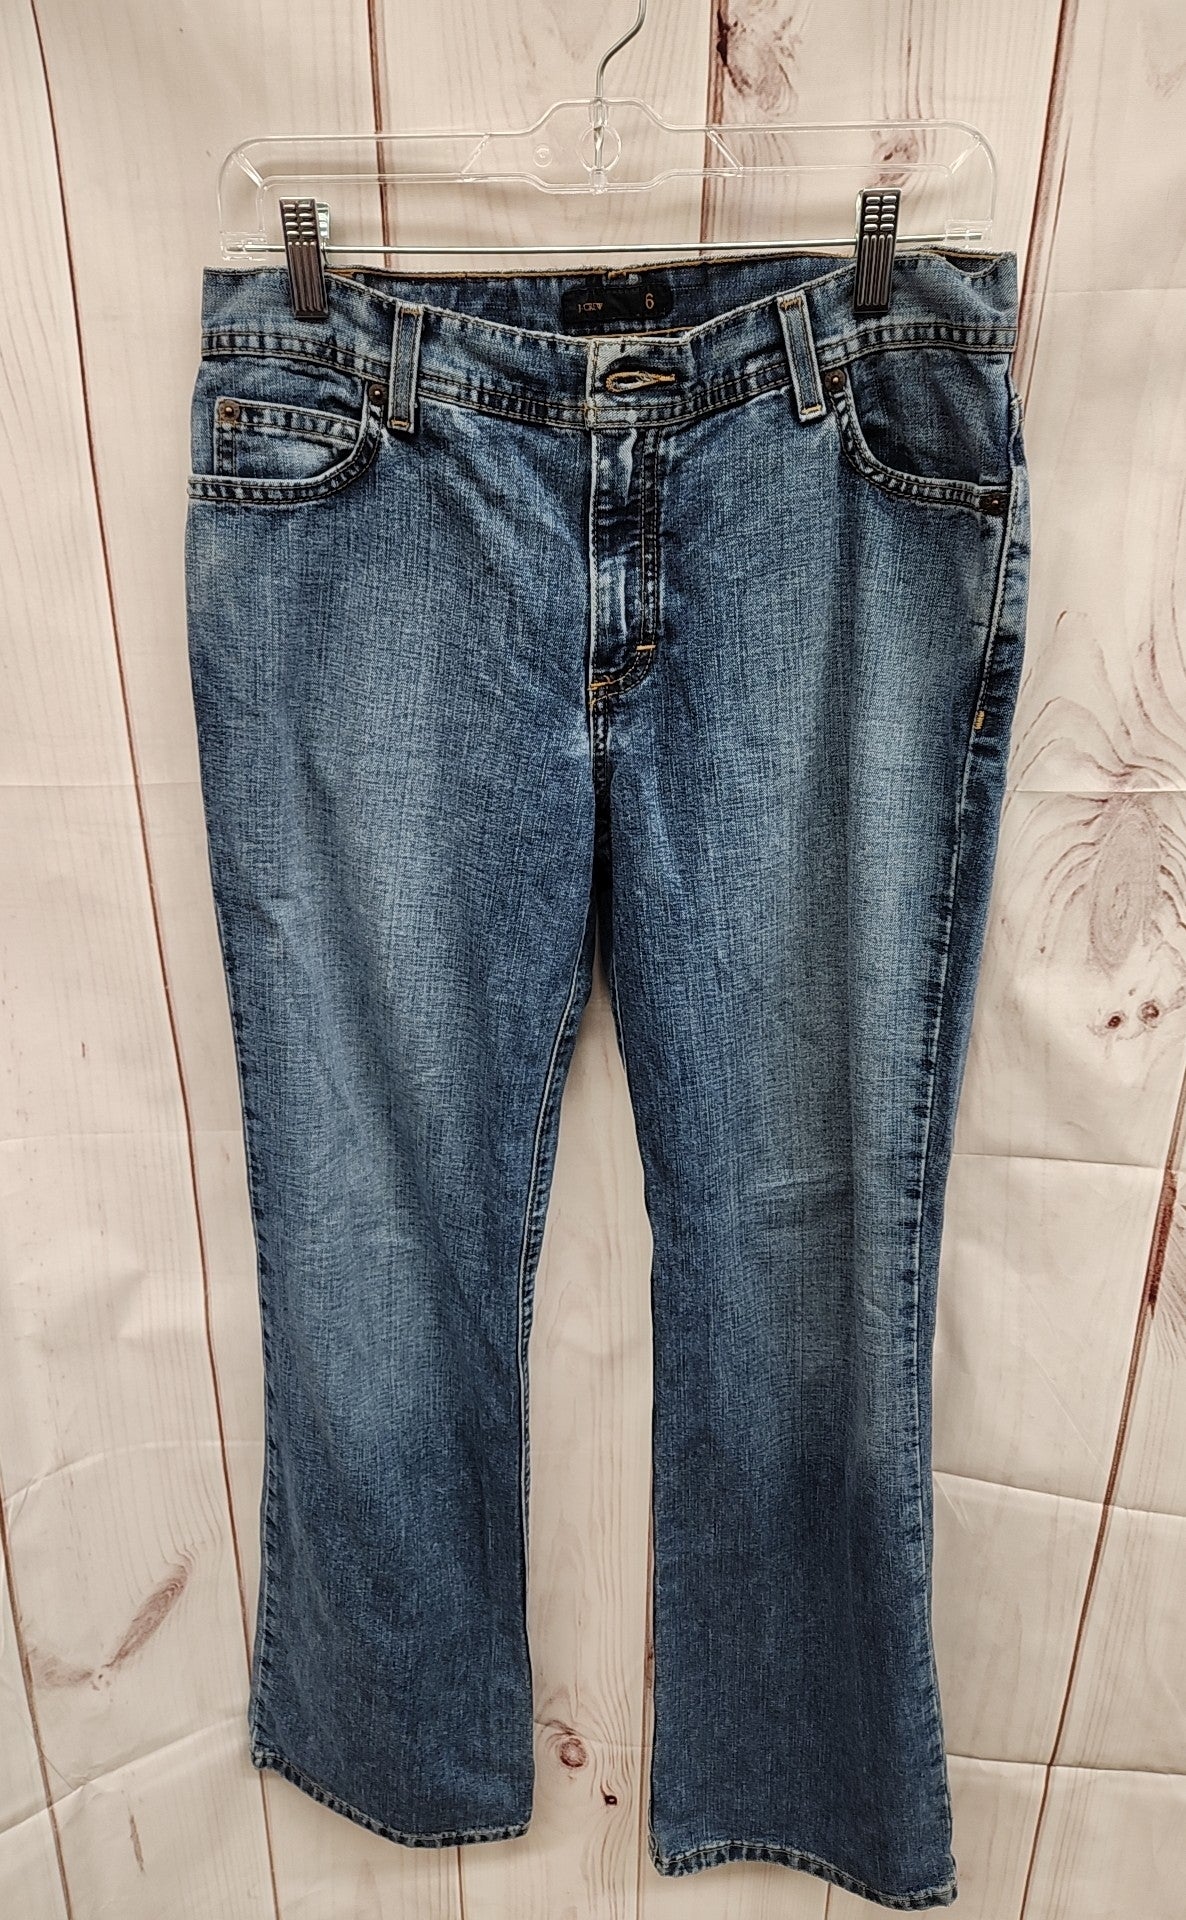 J Crew Women's Size 28 (5-6) Blue Jeans